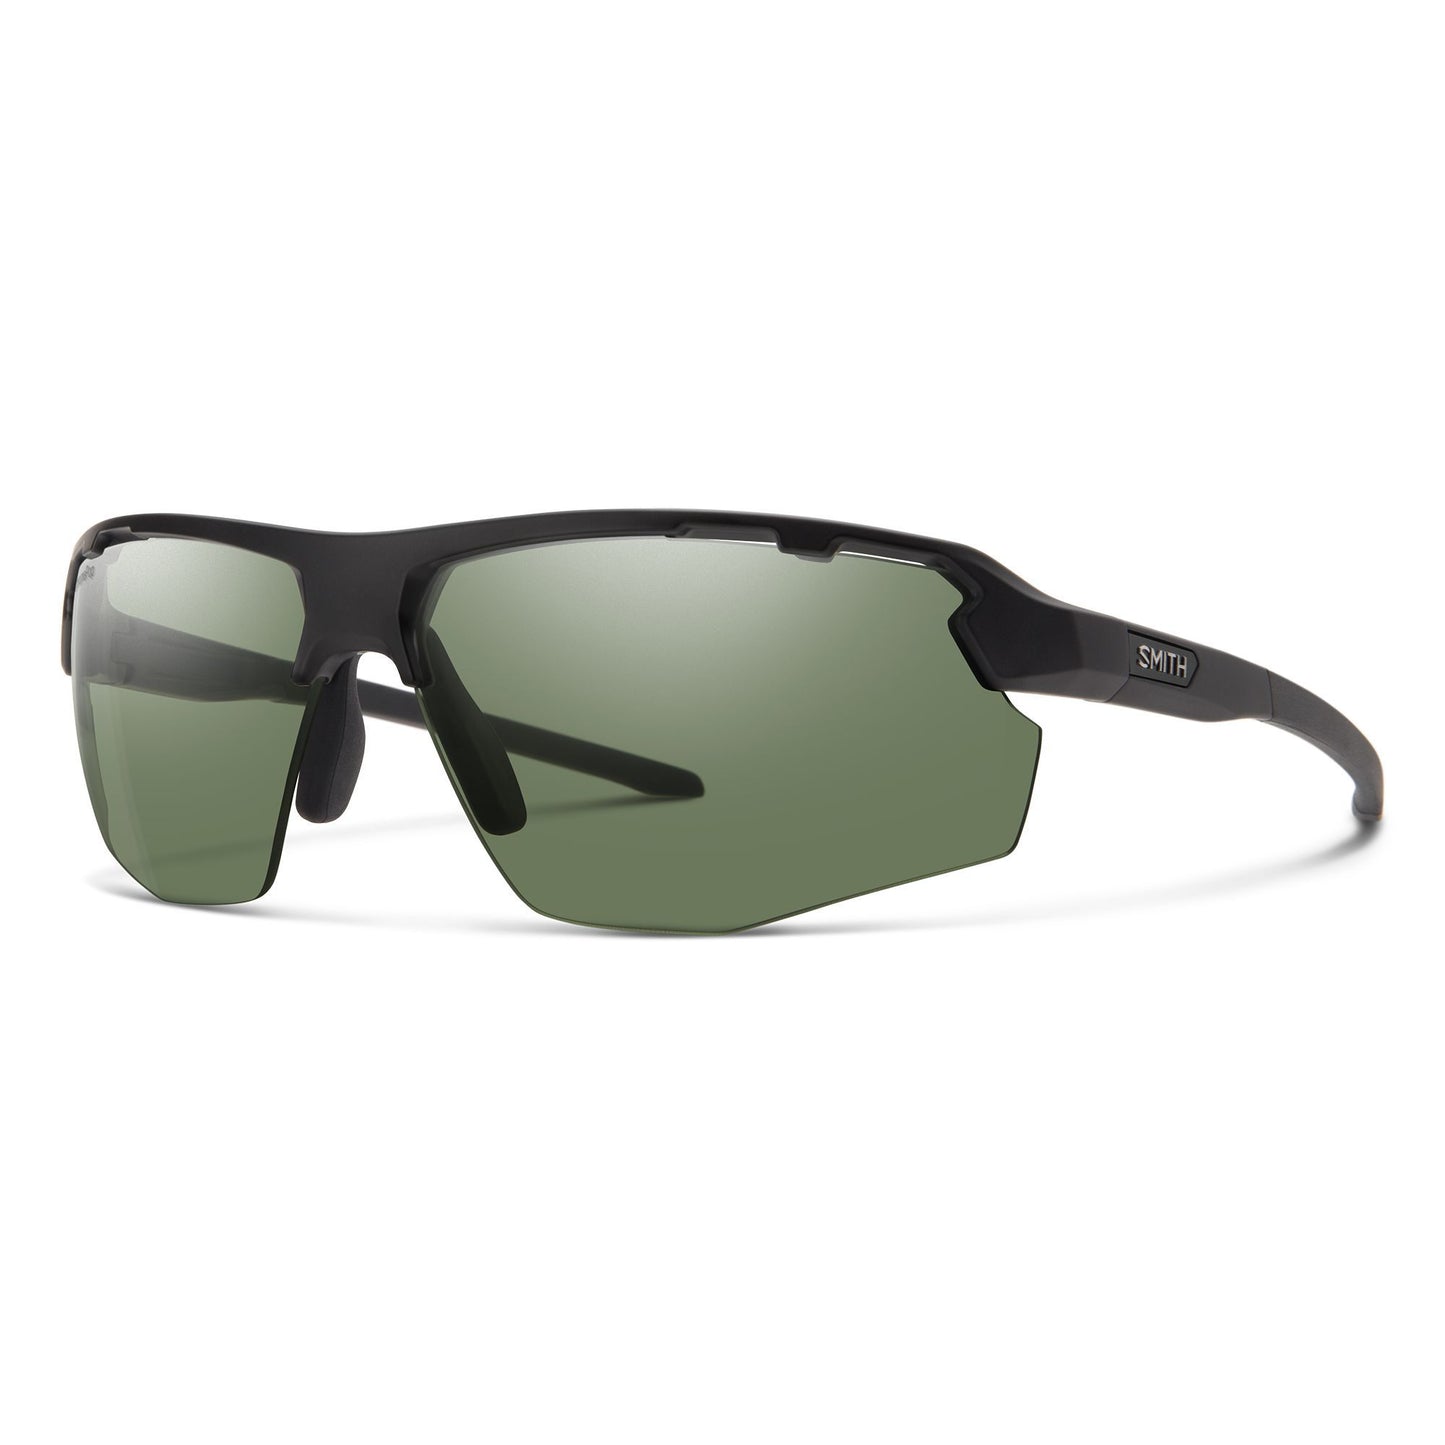 Smith Resolve Sunglasses Matte Black / ChromaPop Polarized Gray Green Sunglasses